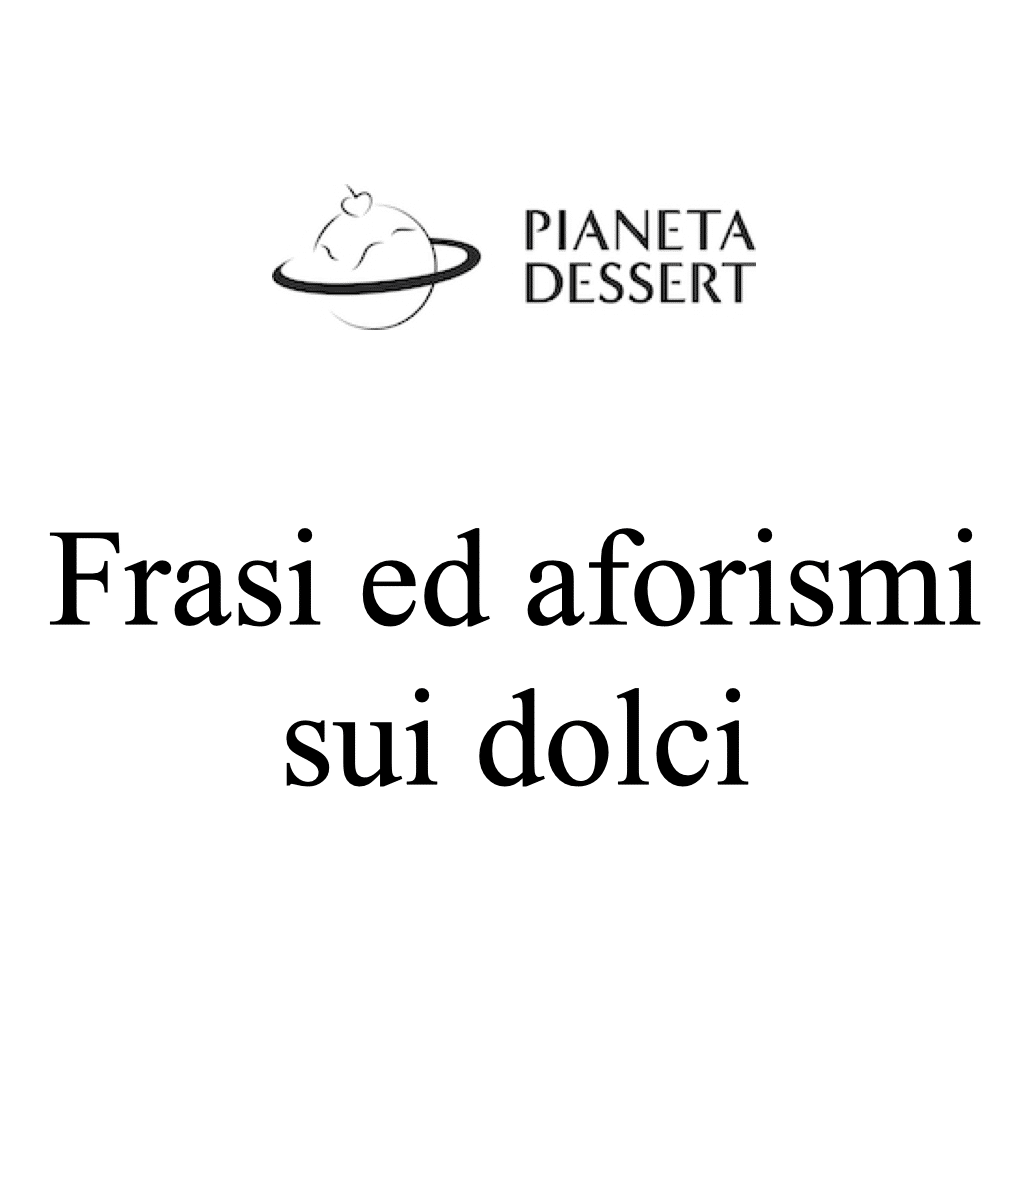 https://s8d8i4w6.rocketcdn.me/wp-content/uploads/2023/08/Frasi-ed-aforismi-sui-dolci-di-Pianeta-Dessert.png